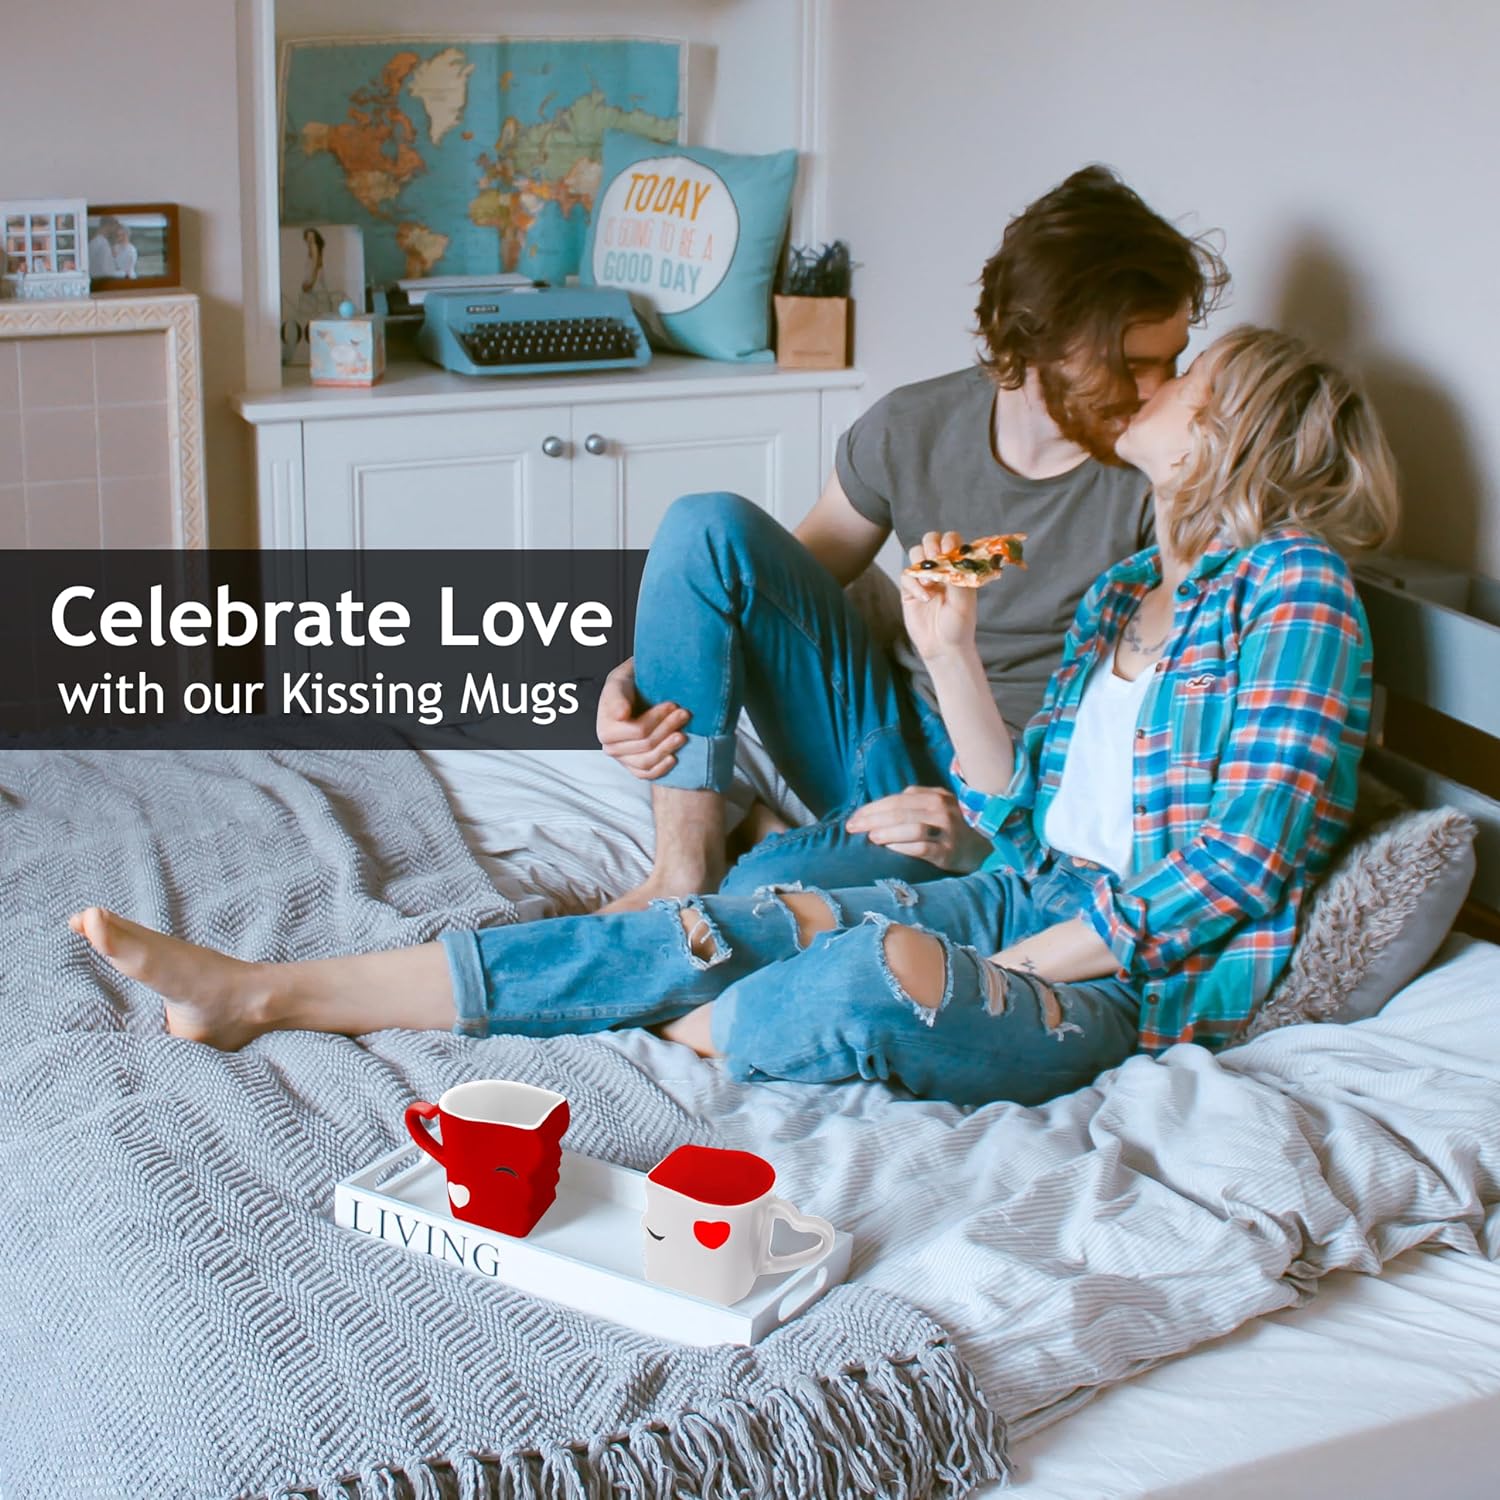 MIAMIO - Coffee Mugs/Kissing Mugs Bridal Pair Gift Set for Weddings/Birthday/Anniversary with Gift Box (Red) 3